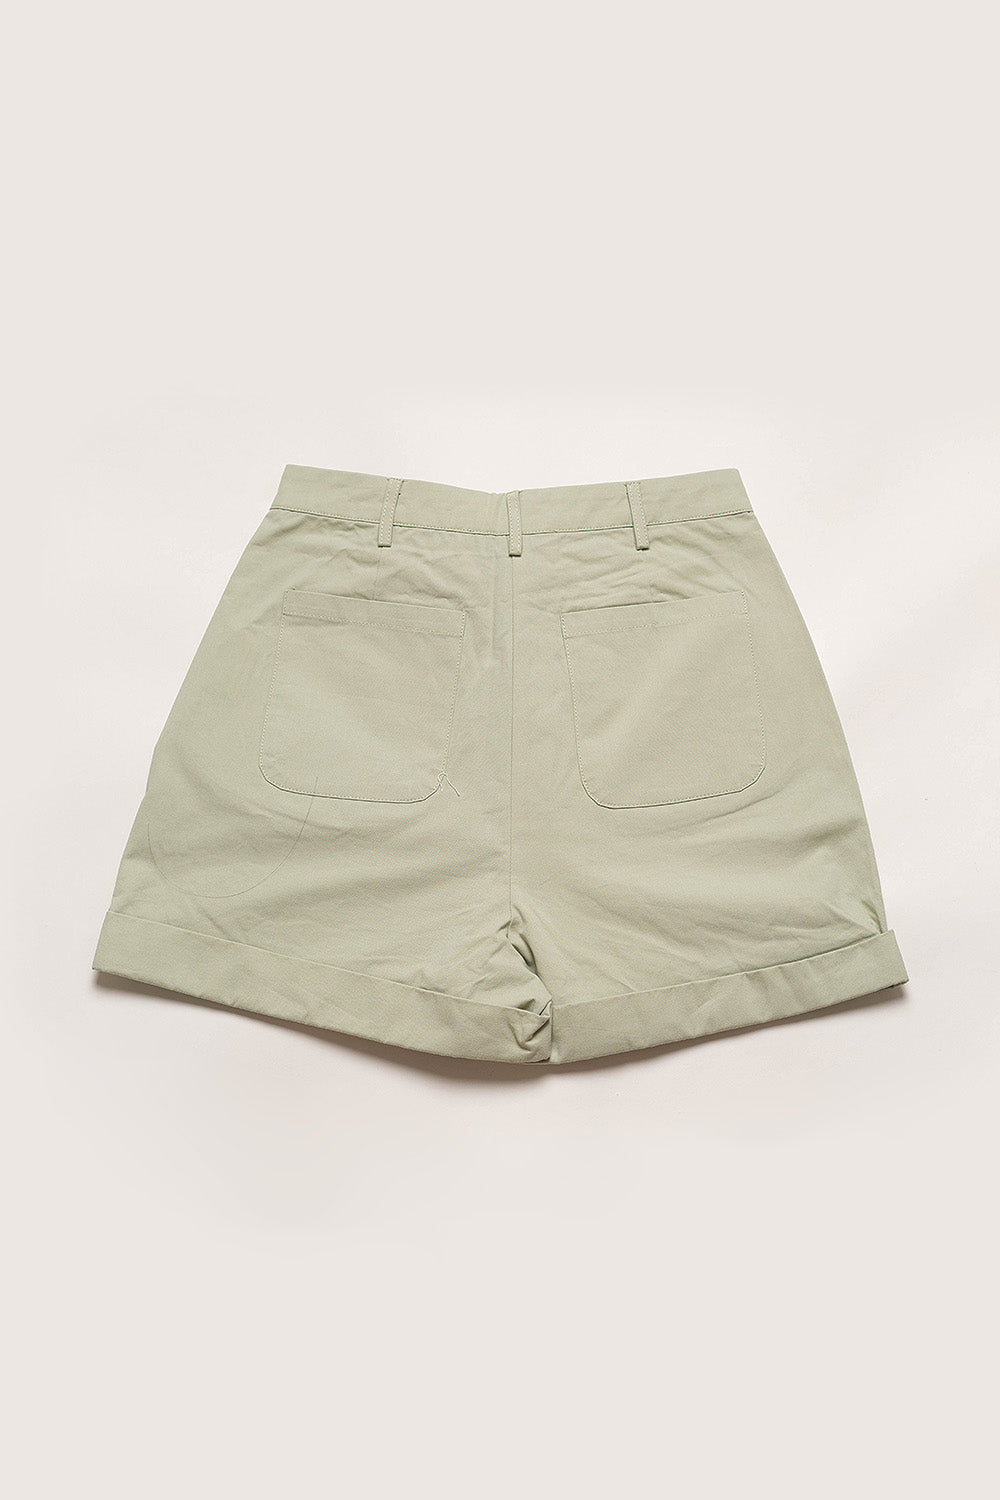 Cotton Twill Shorts (Sage)